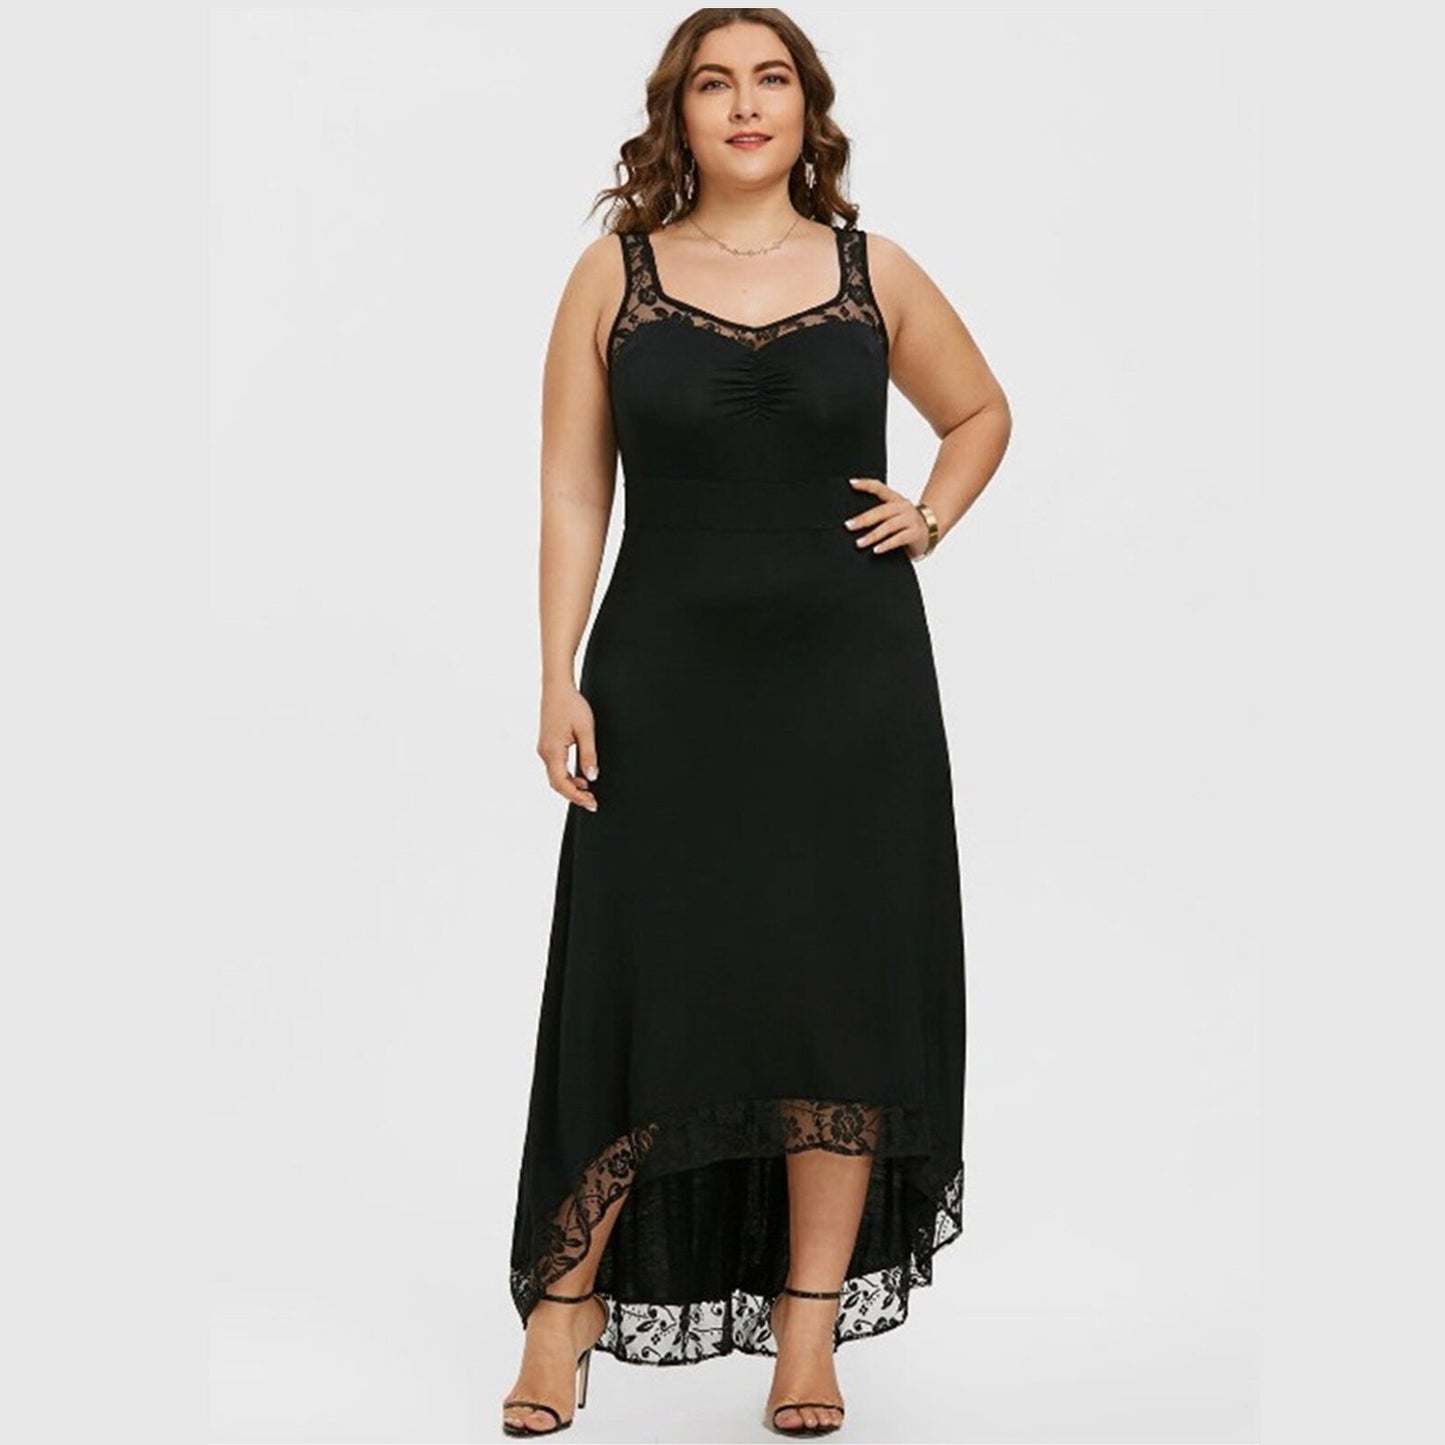 Sexy Long Dress Woman Plus Size Sleeveless Black Lace Tank Dress Summer Low High Hem Solid Party Club Dresses Robe Femme 2021